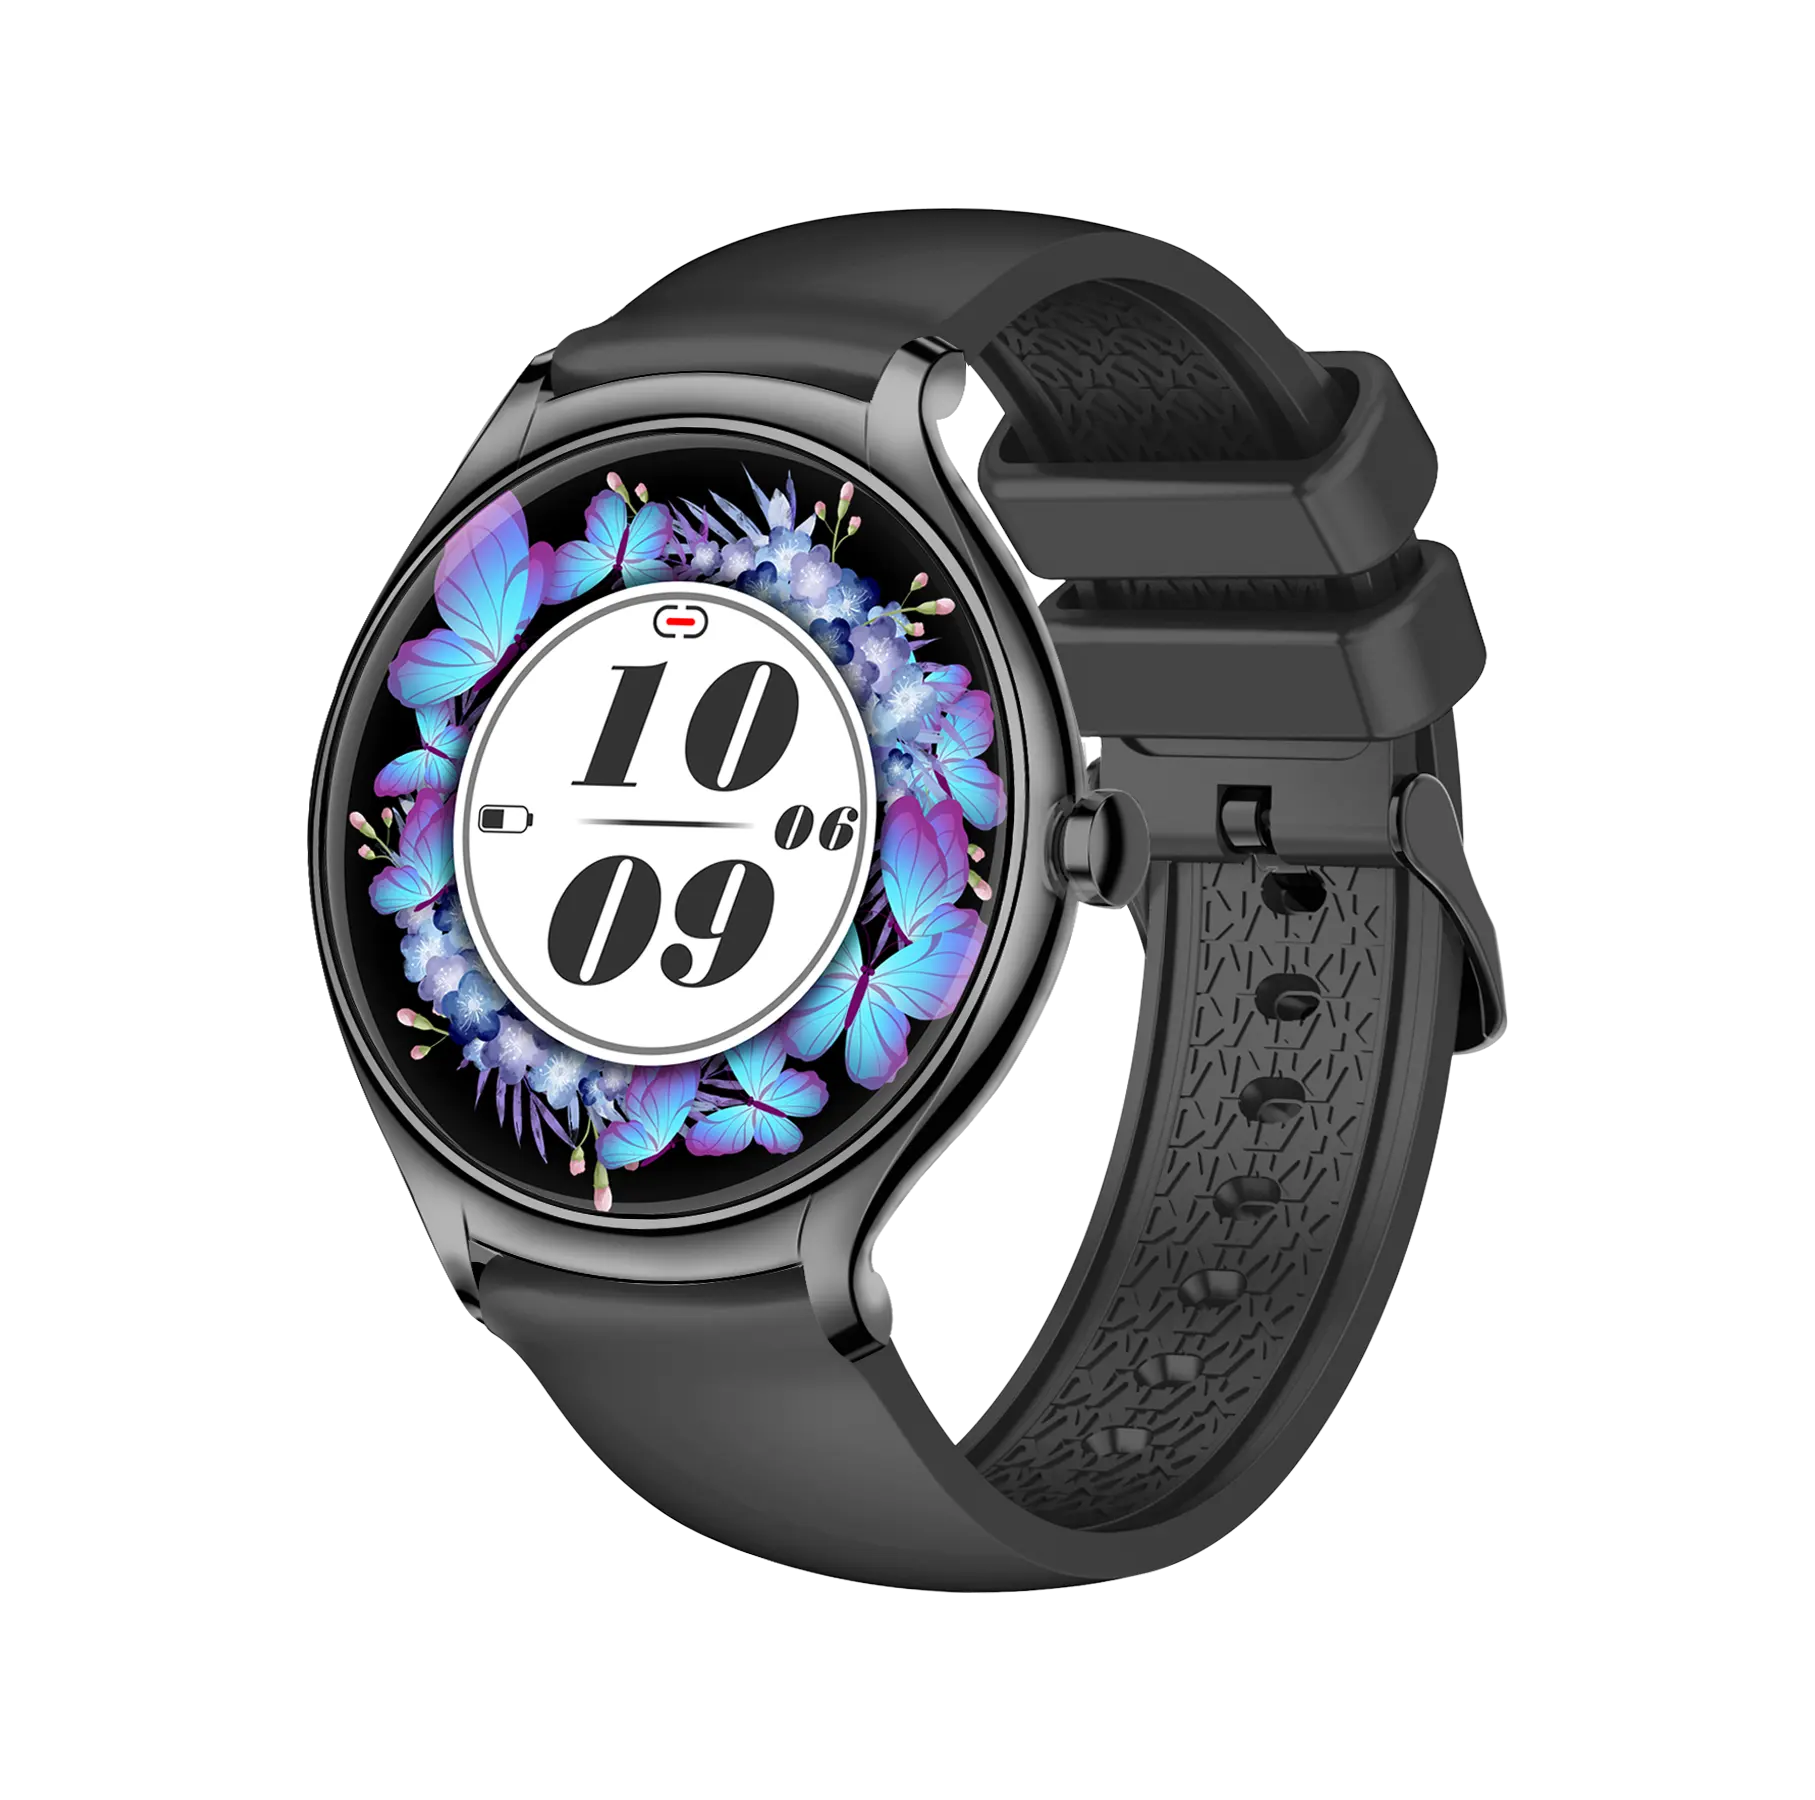 Reloj de moda FBT67 con descuento favorable IP67 Smartwatch AI Voice Smart Watch